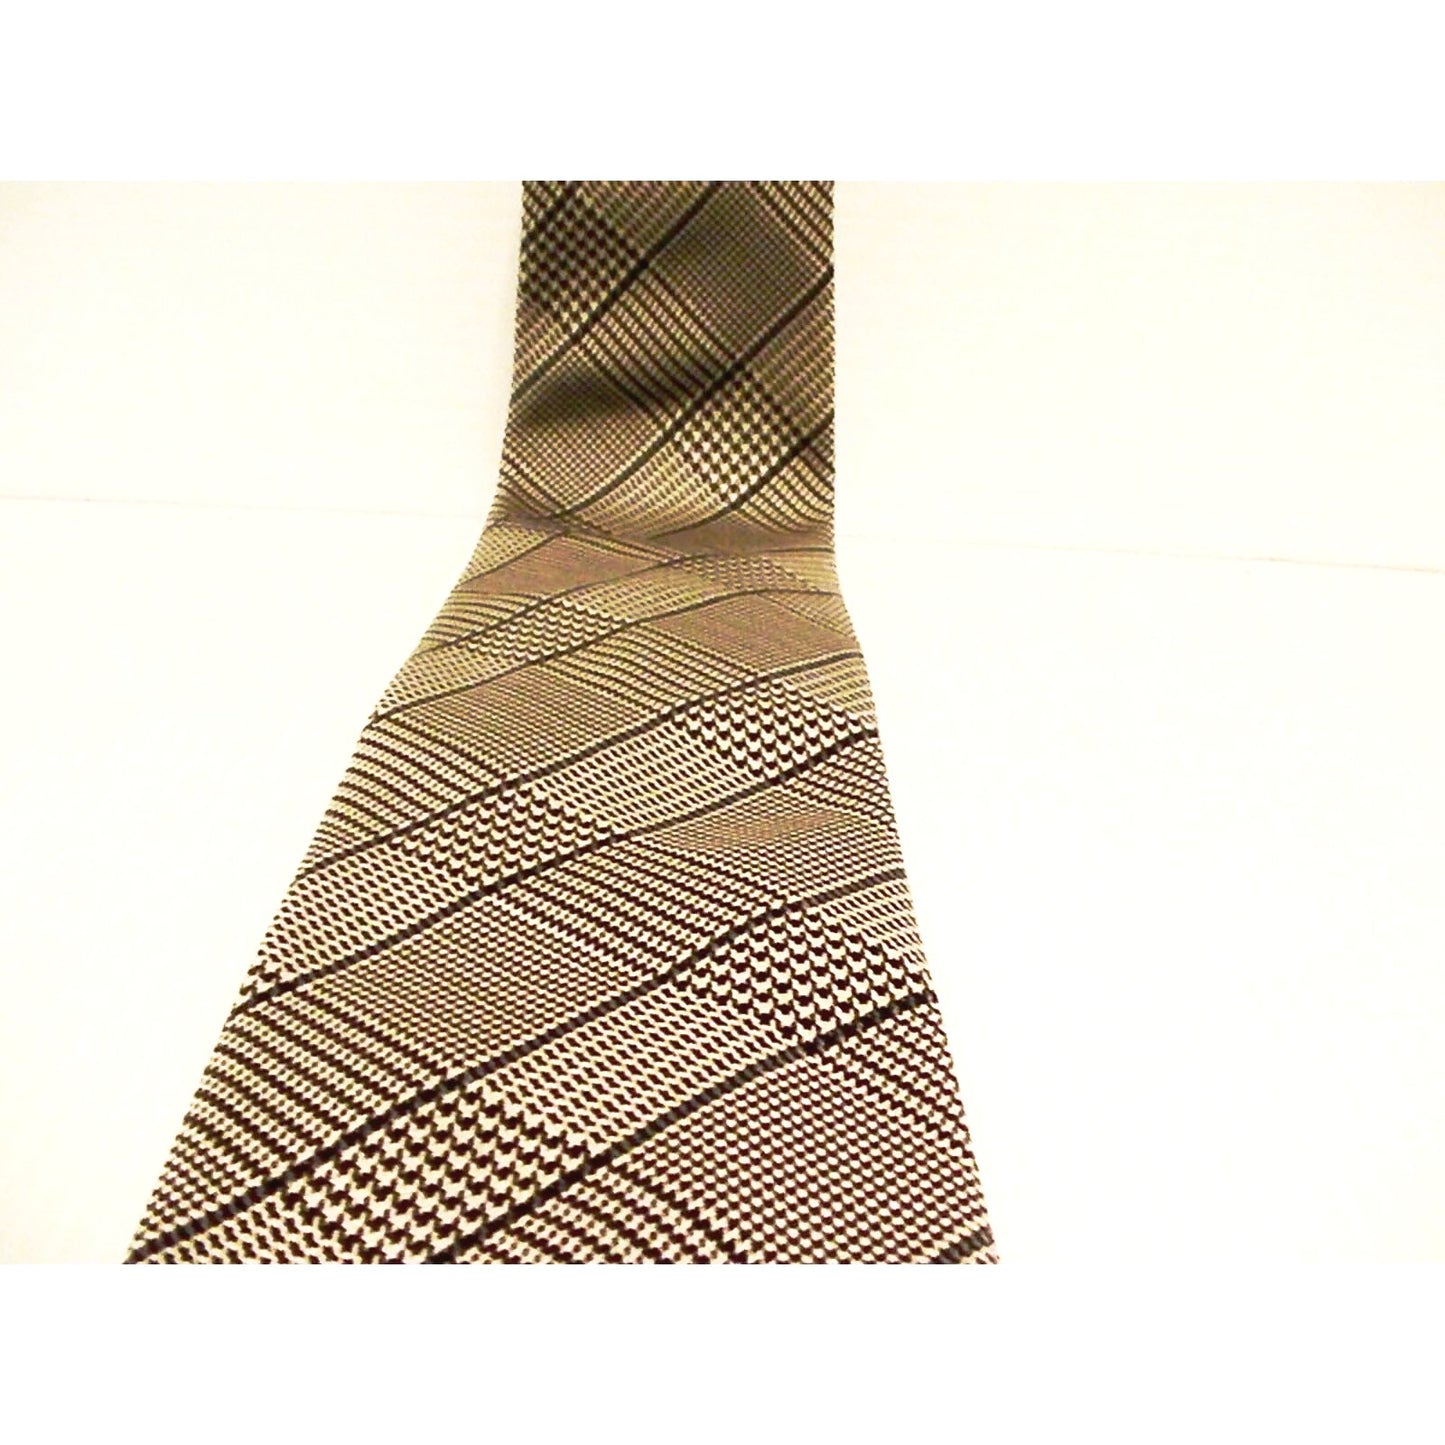 GIANNI VERSACE MEDUSA / Men's 100% SILK gray tie made in Italy